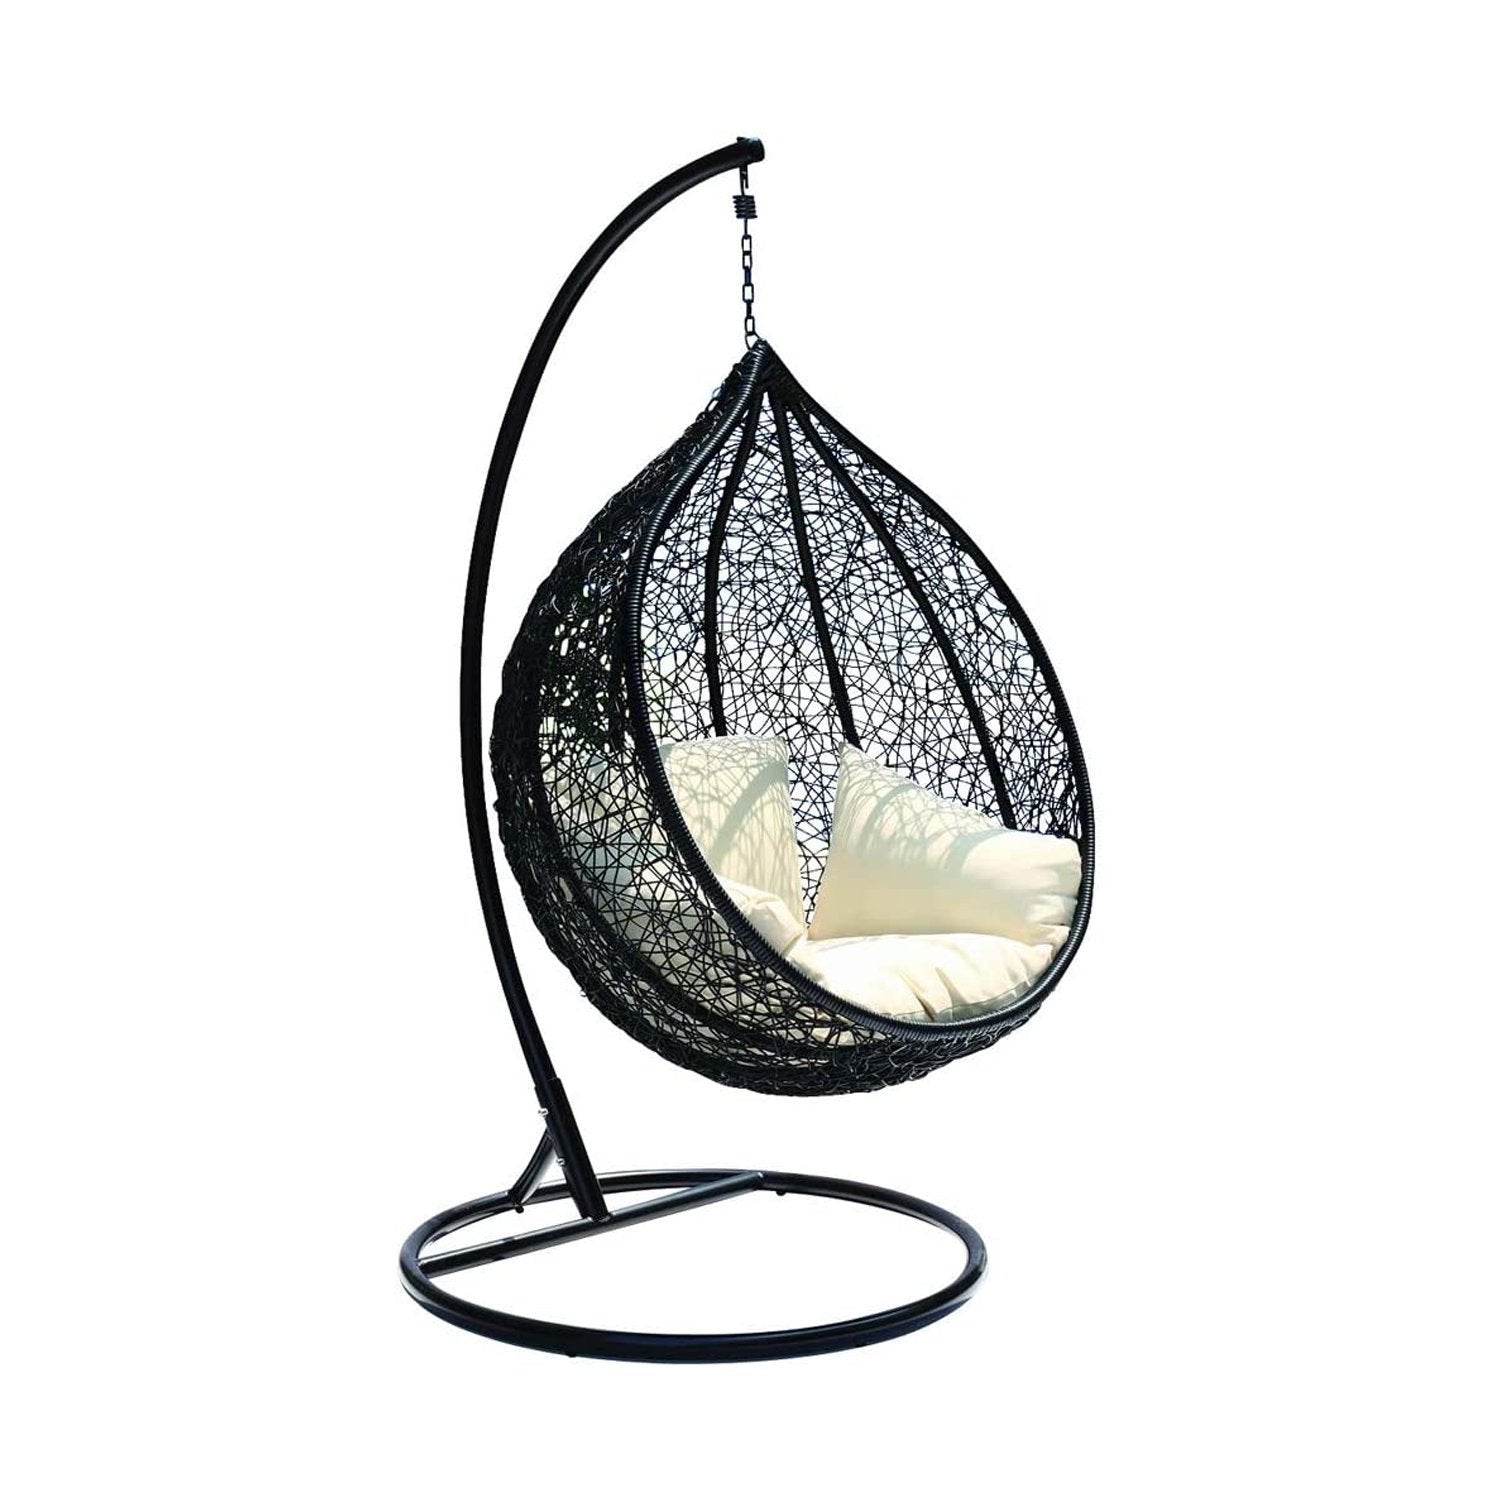 Outdoor Wicker Hanging Egg Chair - Black